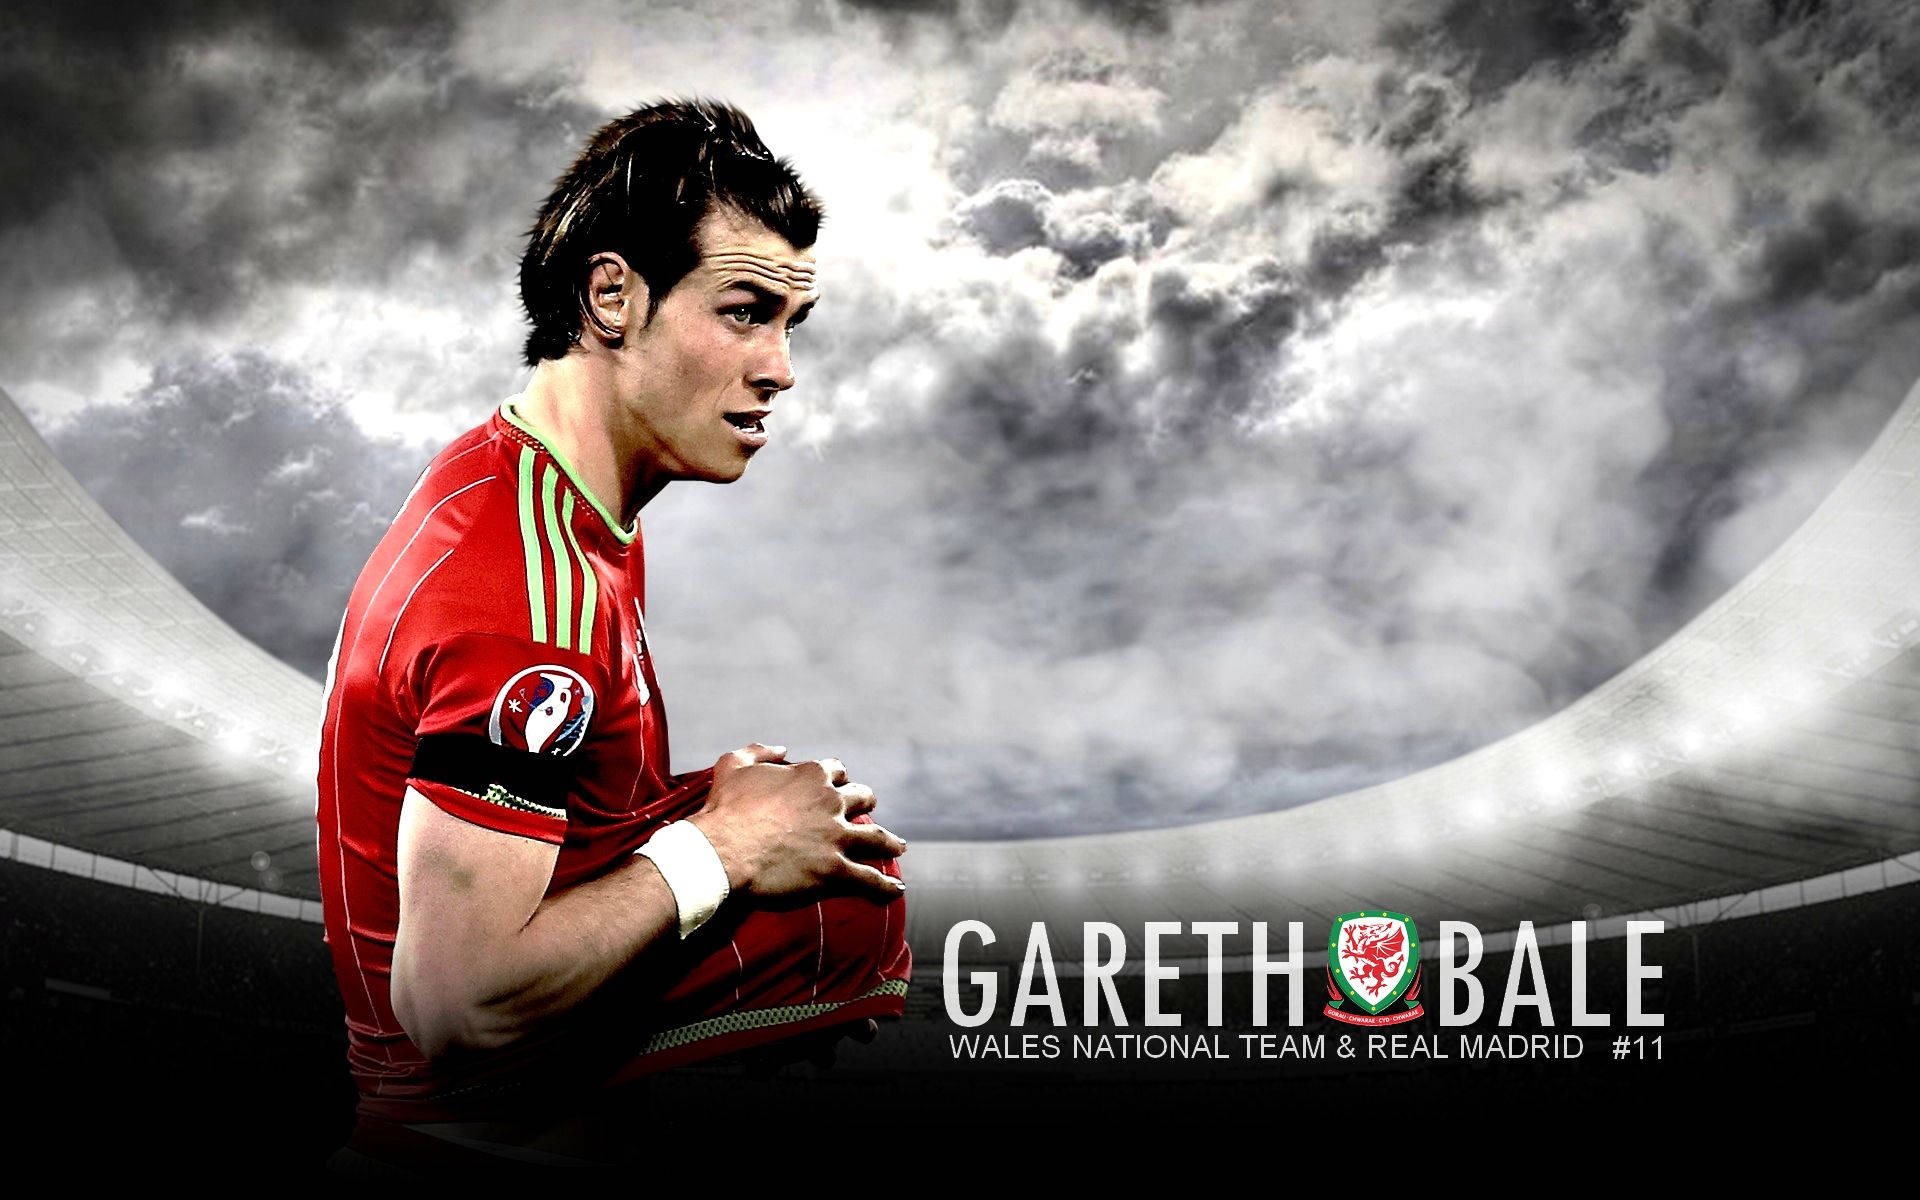 Wales National Football Team Gareth Bale Fanart Wallpaper